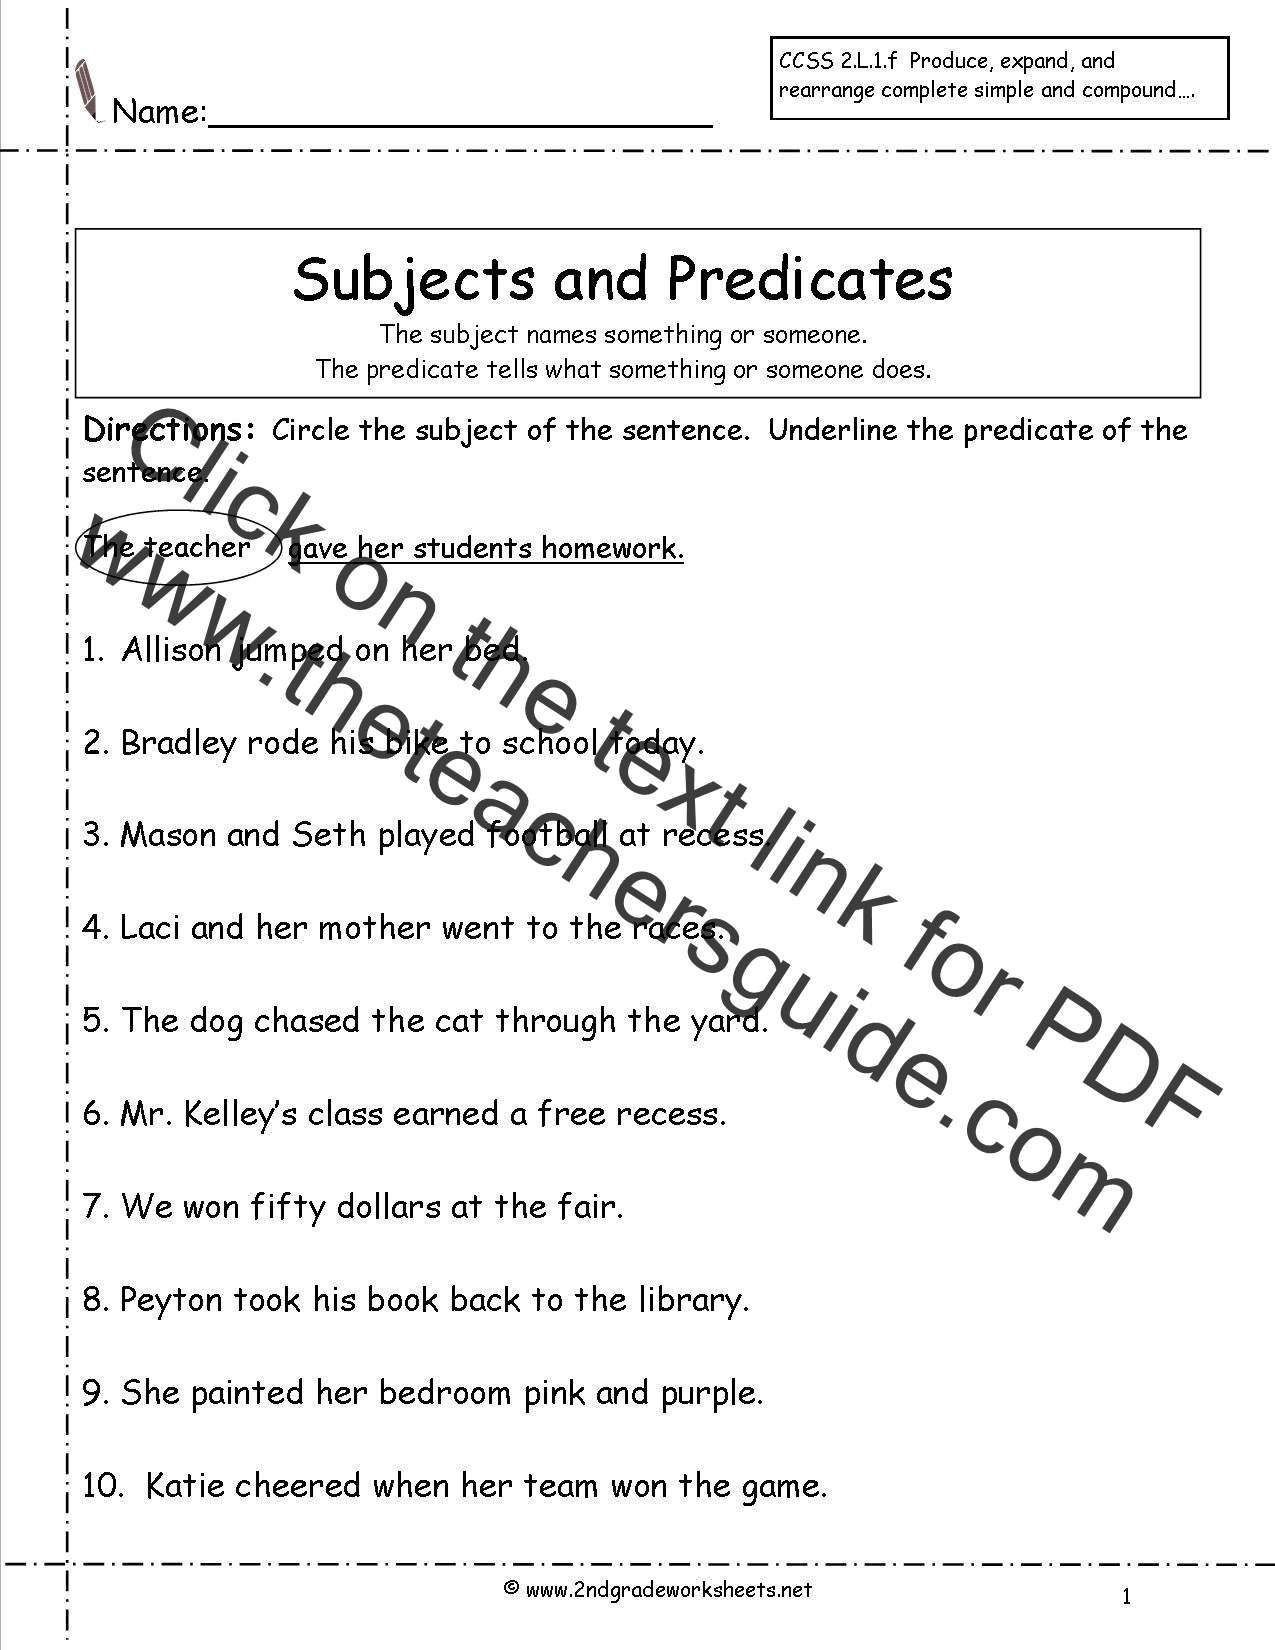 Subject And Predicate Worksheet